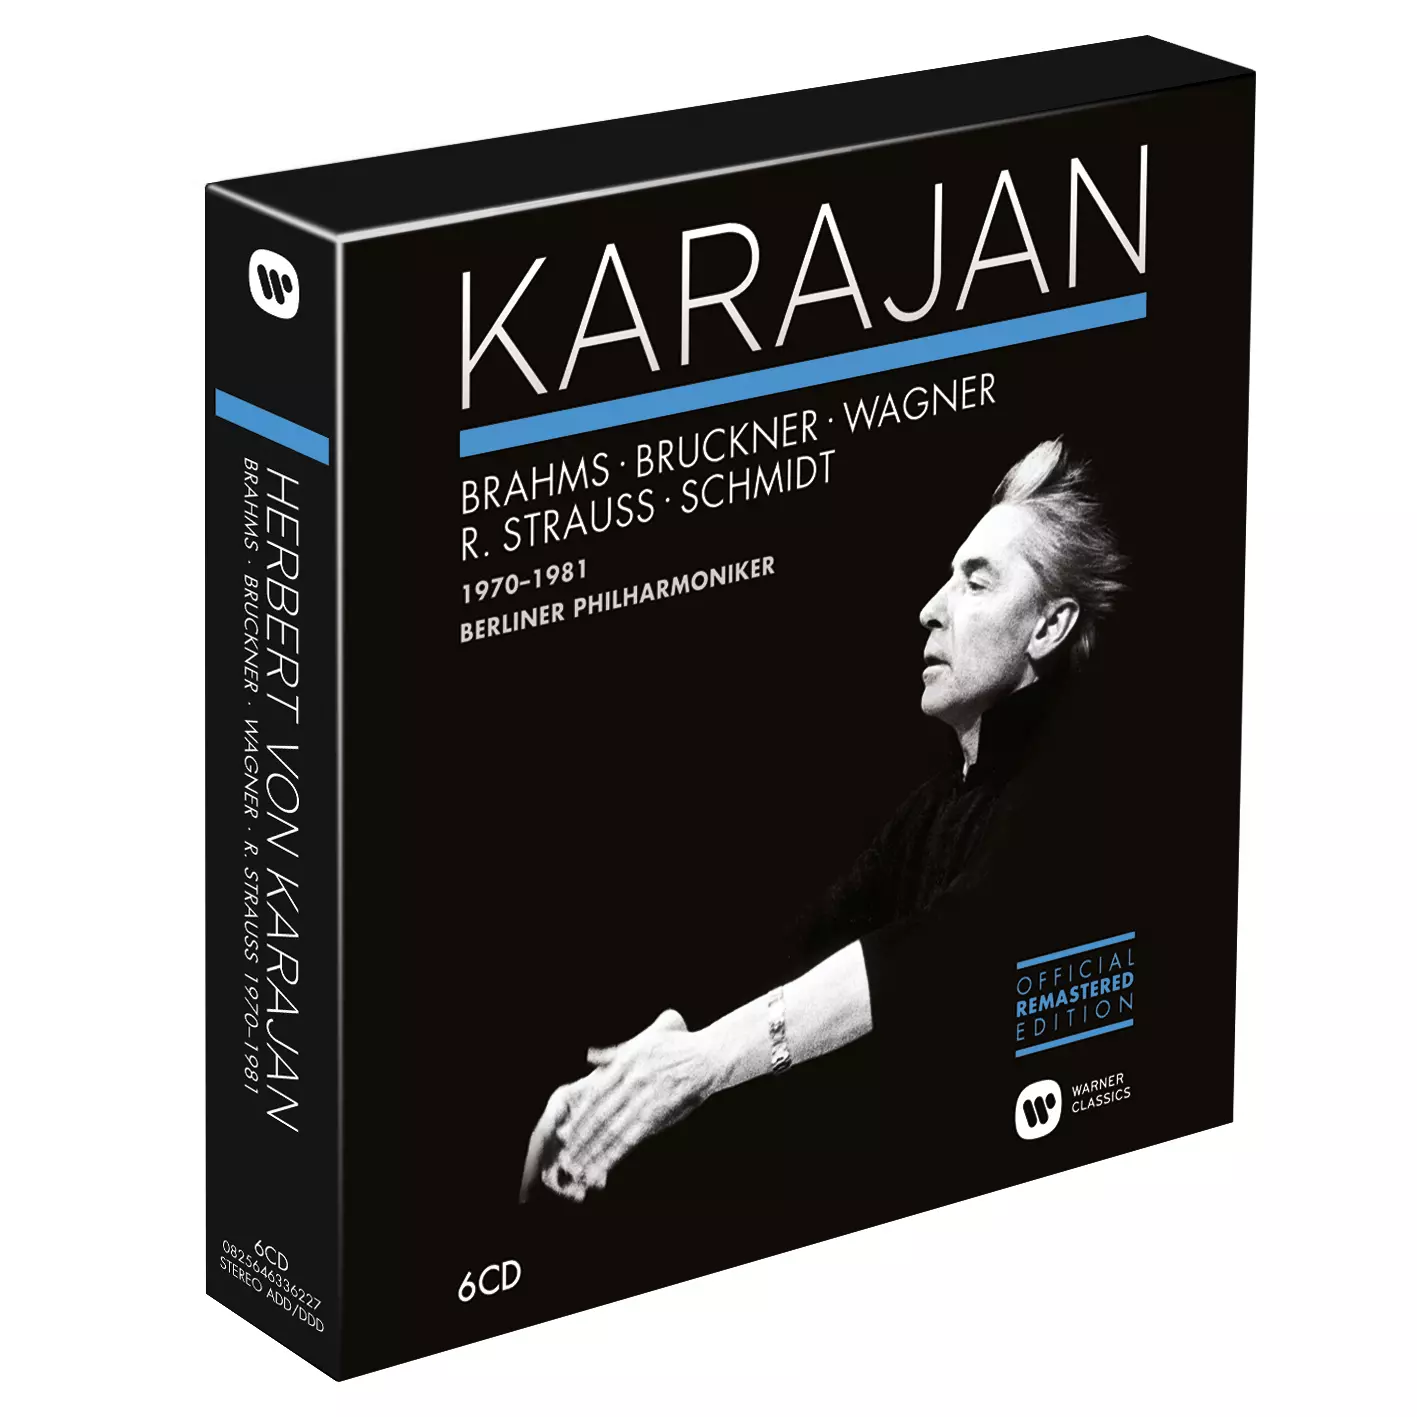 Karajan 2014: Orchestral recordings from Germany & Austria Sep 1970 - Jan 1981